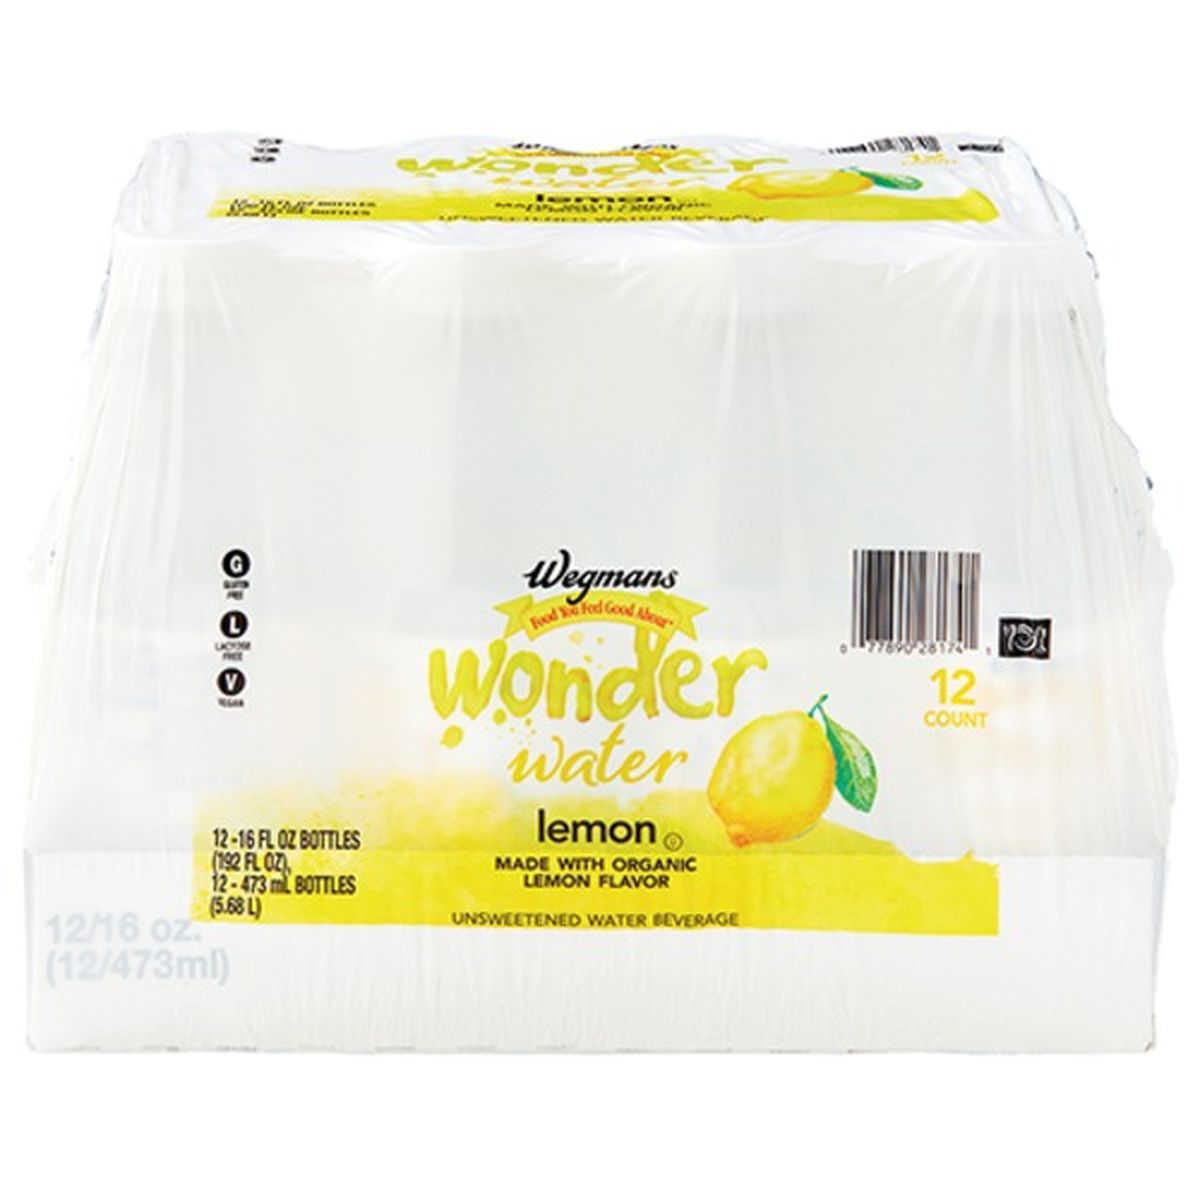 Calories in Wegmans Wonder Water Lemon, 12 Pack